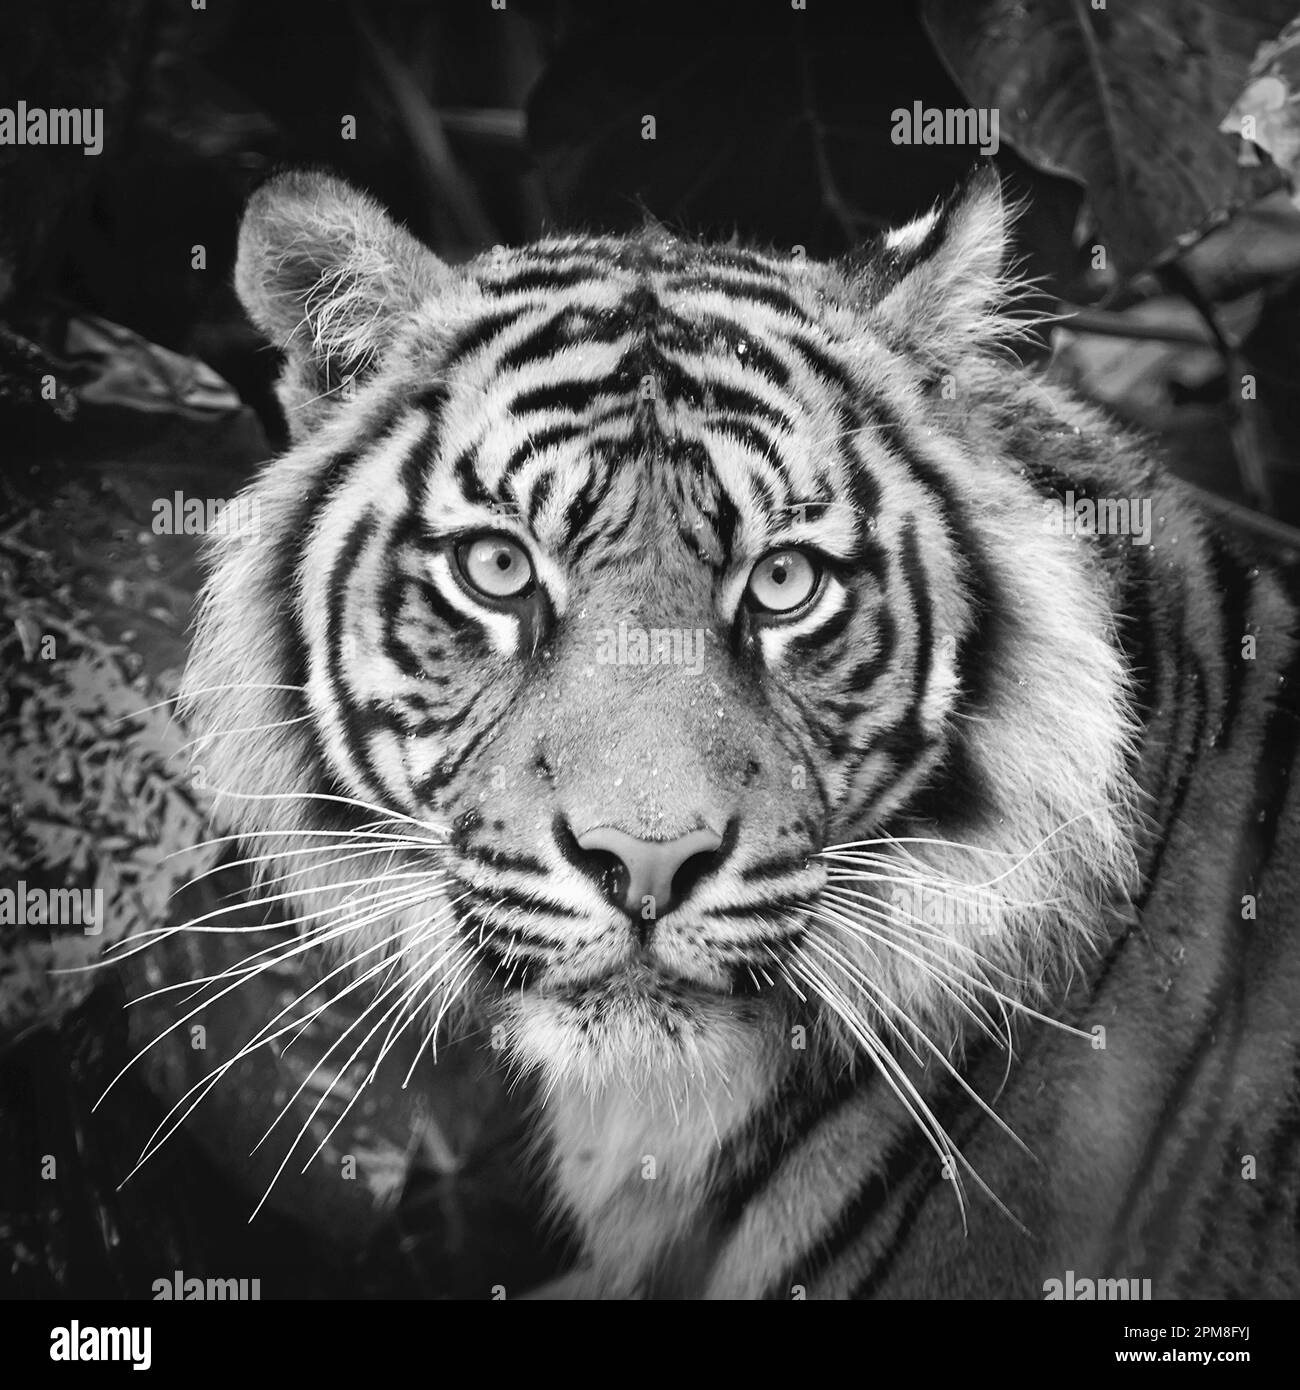 Indonesia, Surabaya, Java, Surabaya Zoo, Sumatran Tiger, Phantera Tigris Sumatrae. Immagine in bianco e nero. Foto Stock